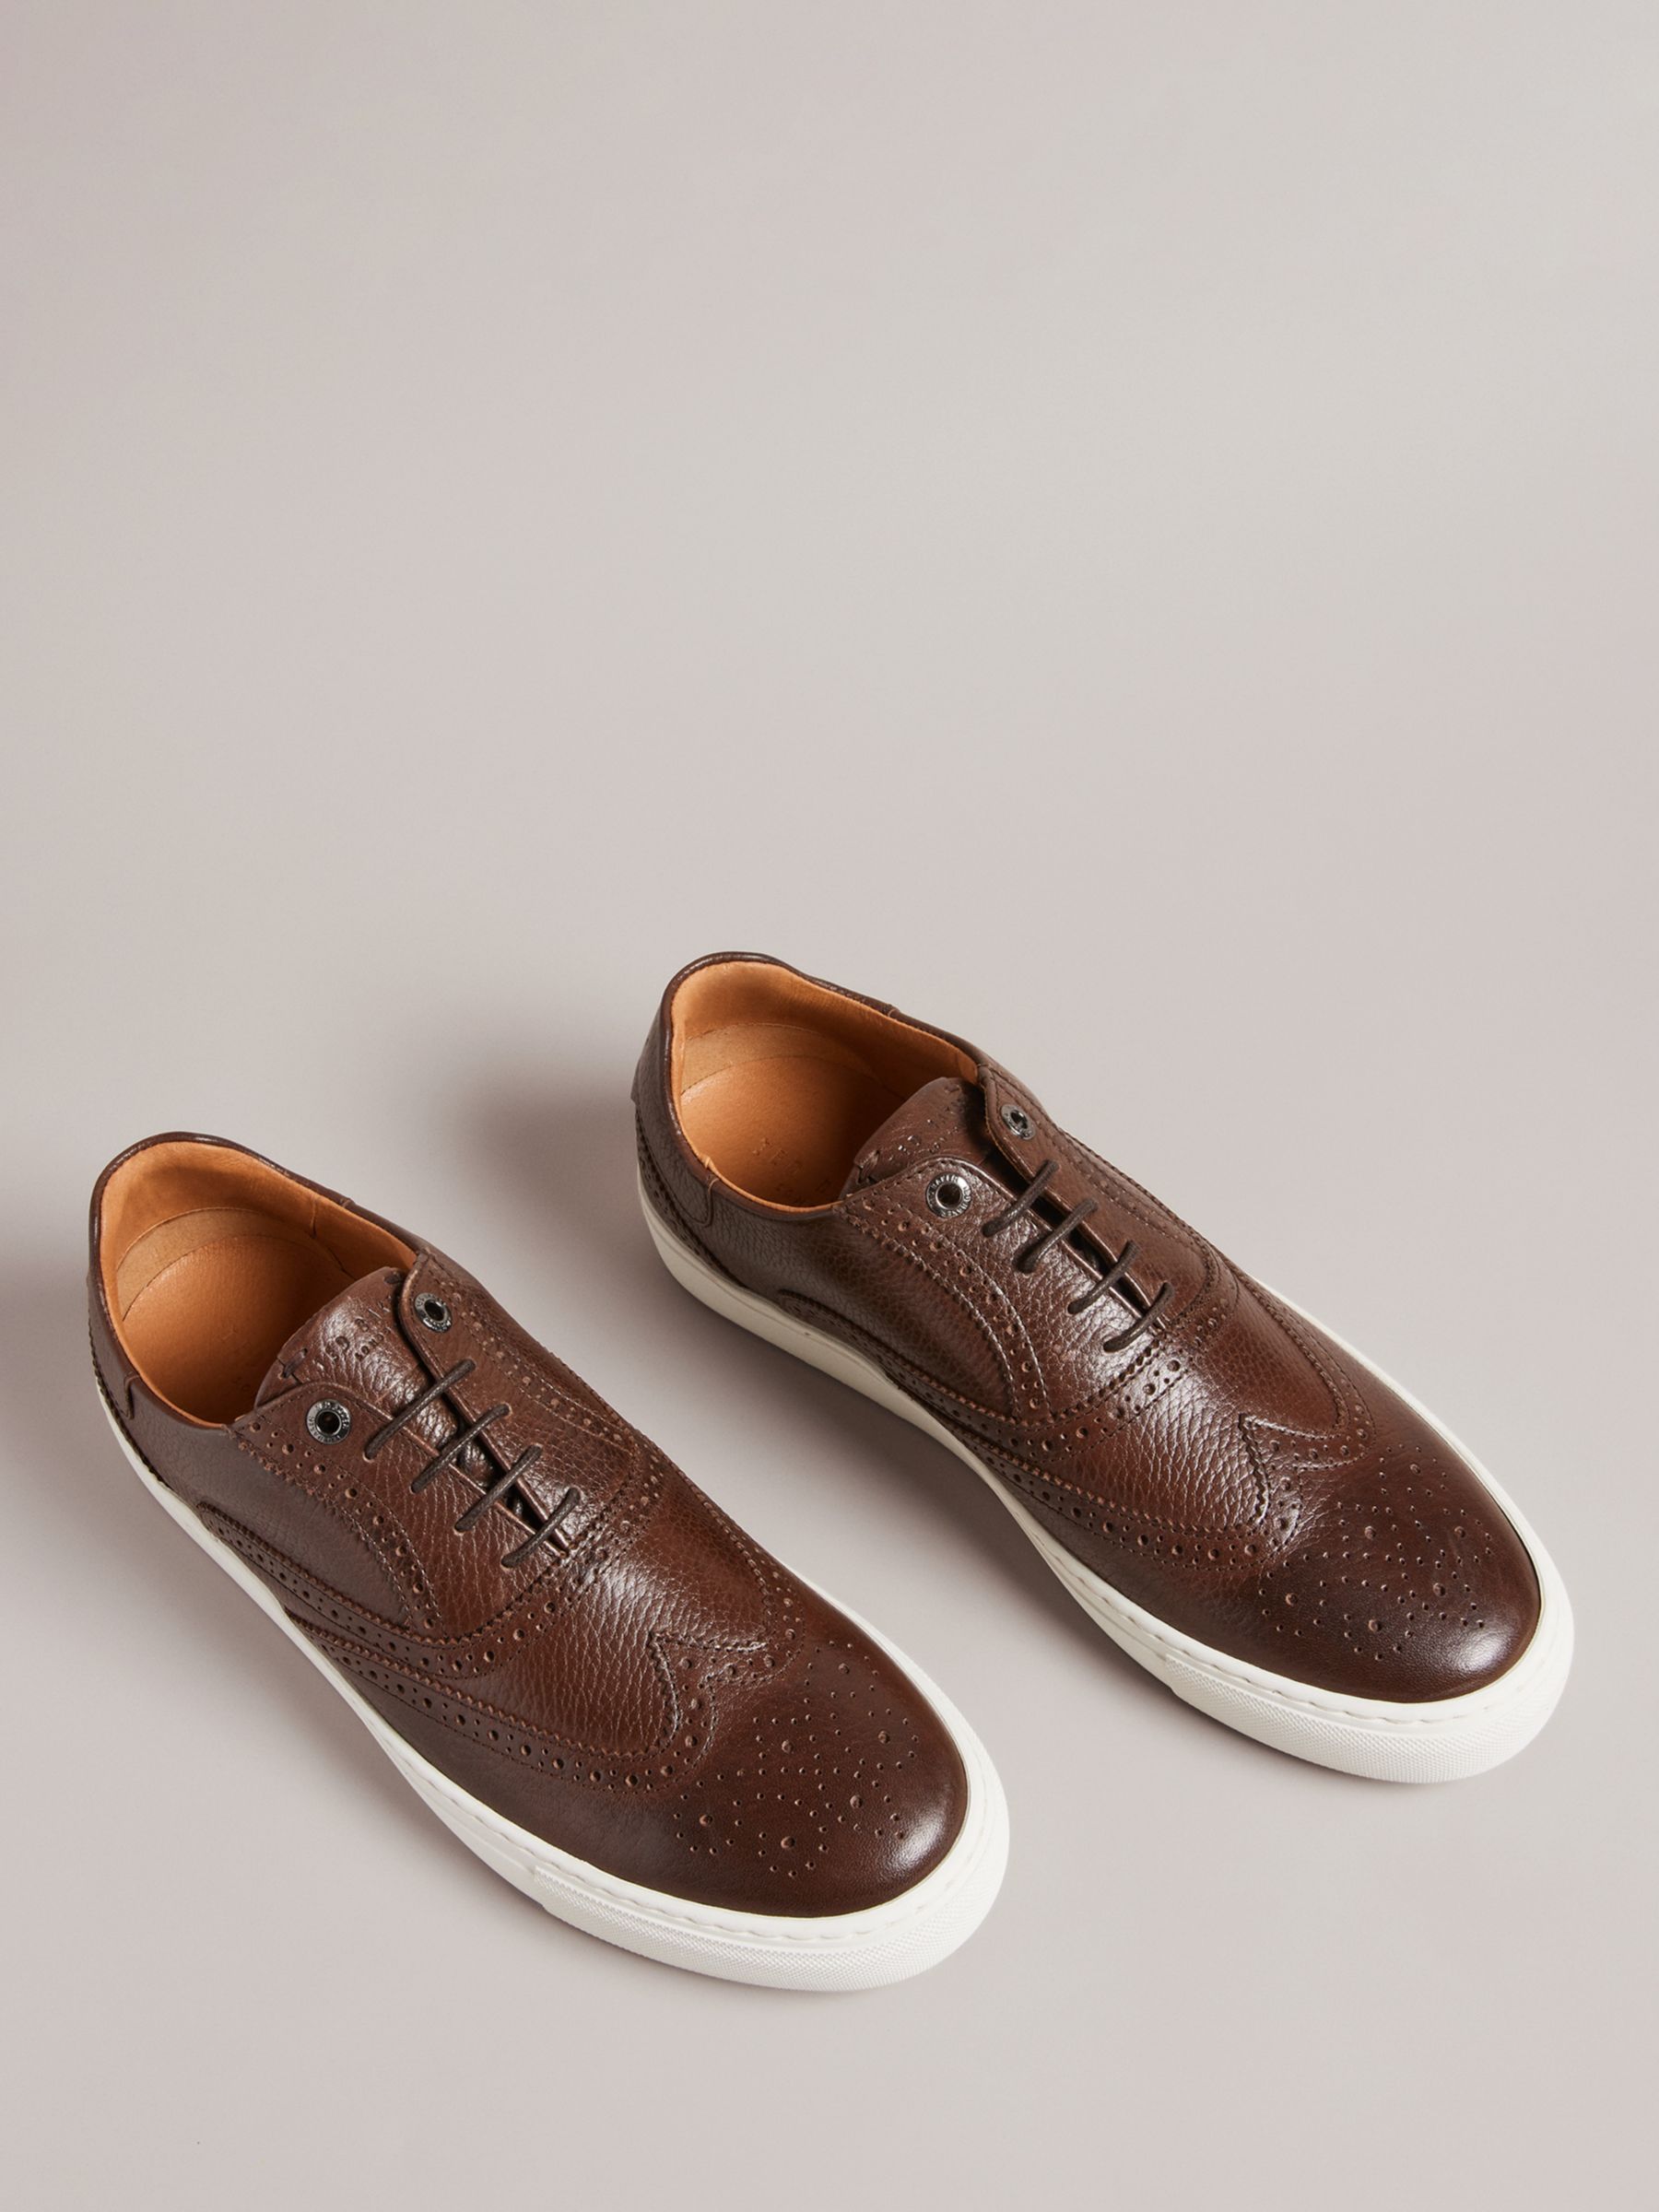 Ted Baker Dentong Lace Up Brogue Shoes, Brown, 8